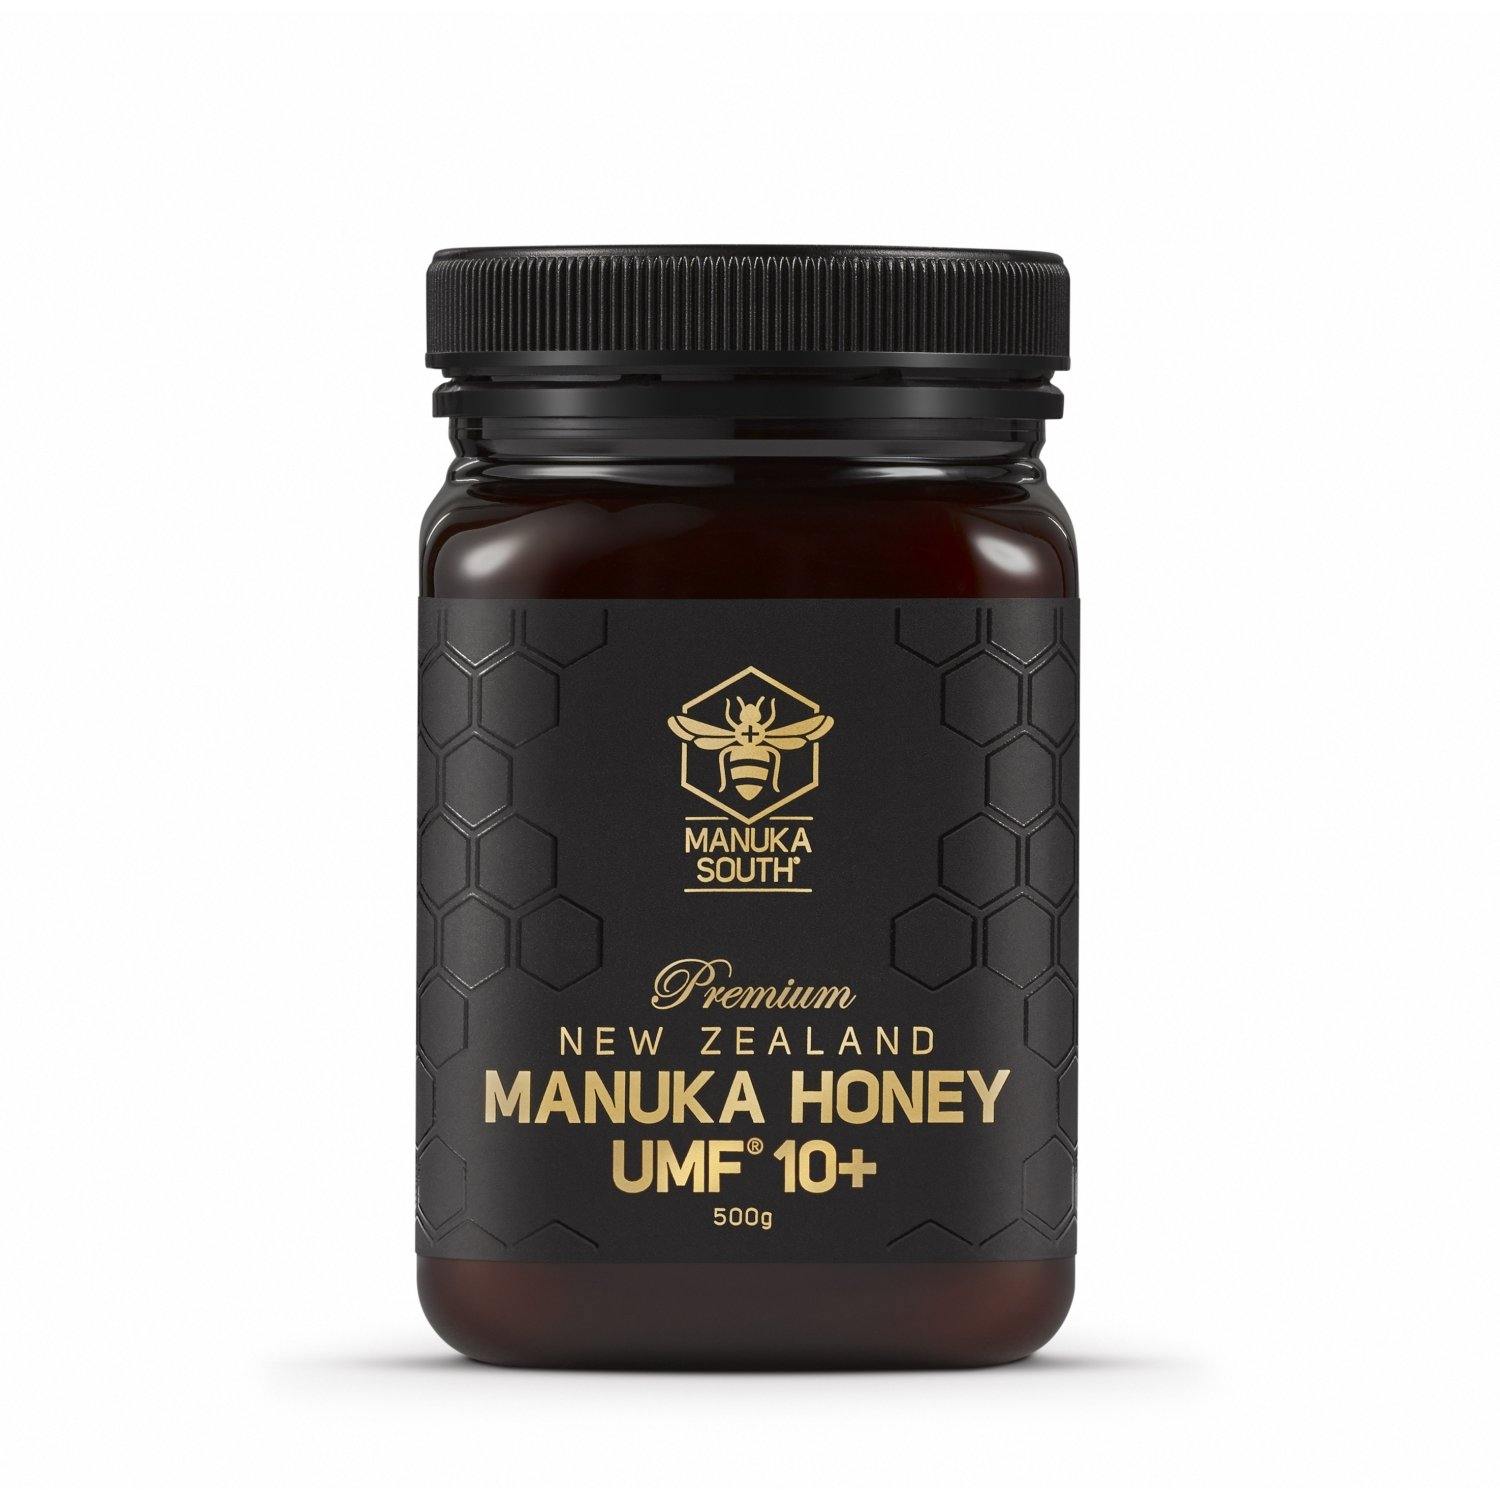 Manuka South Manuka Honey UMF10+ 500g - Function: Immune Support, Ingredient: Manuka Honey, nz made, Price  $50-$150, stomach, Vendor  Manuka South - Aotea Wellness